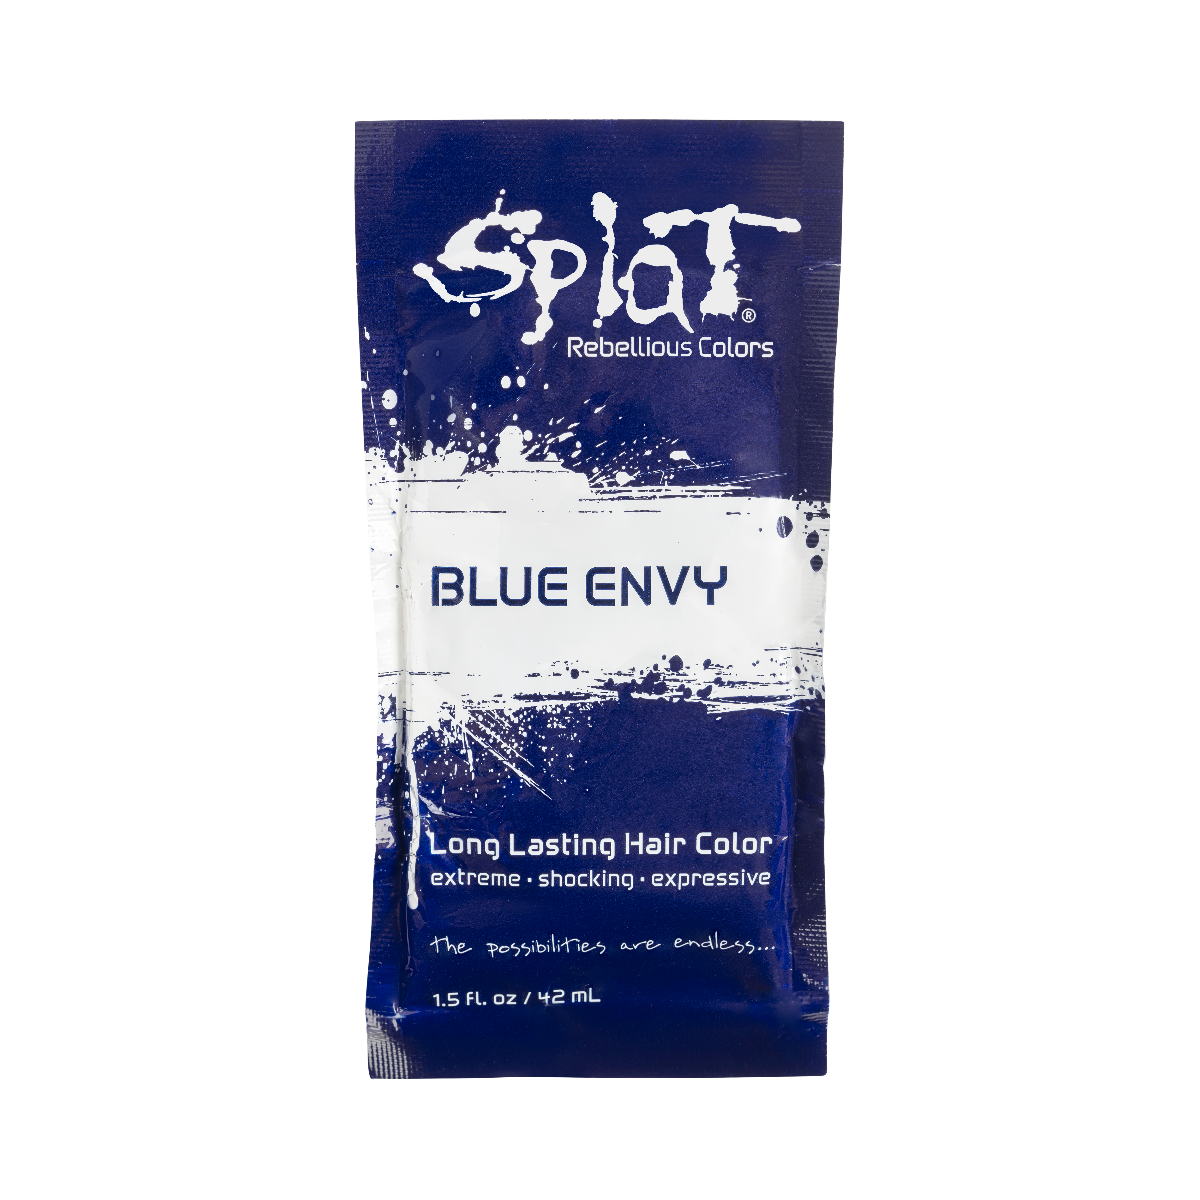 Splat Hair Dye Original Singles Foil Packet in Blue Envy Semi-Permanent Hair Dye